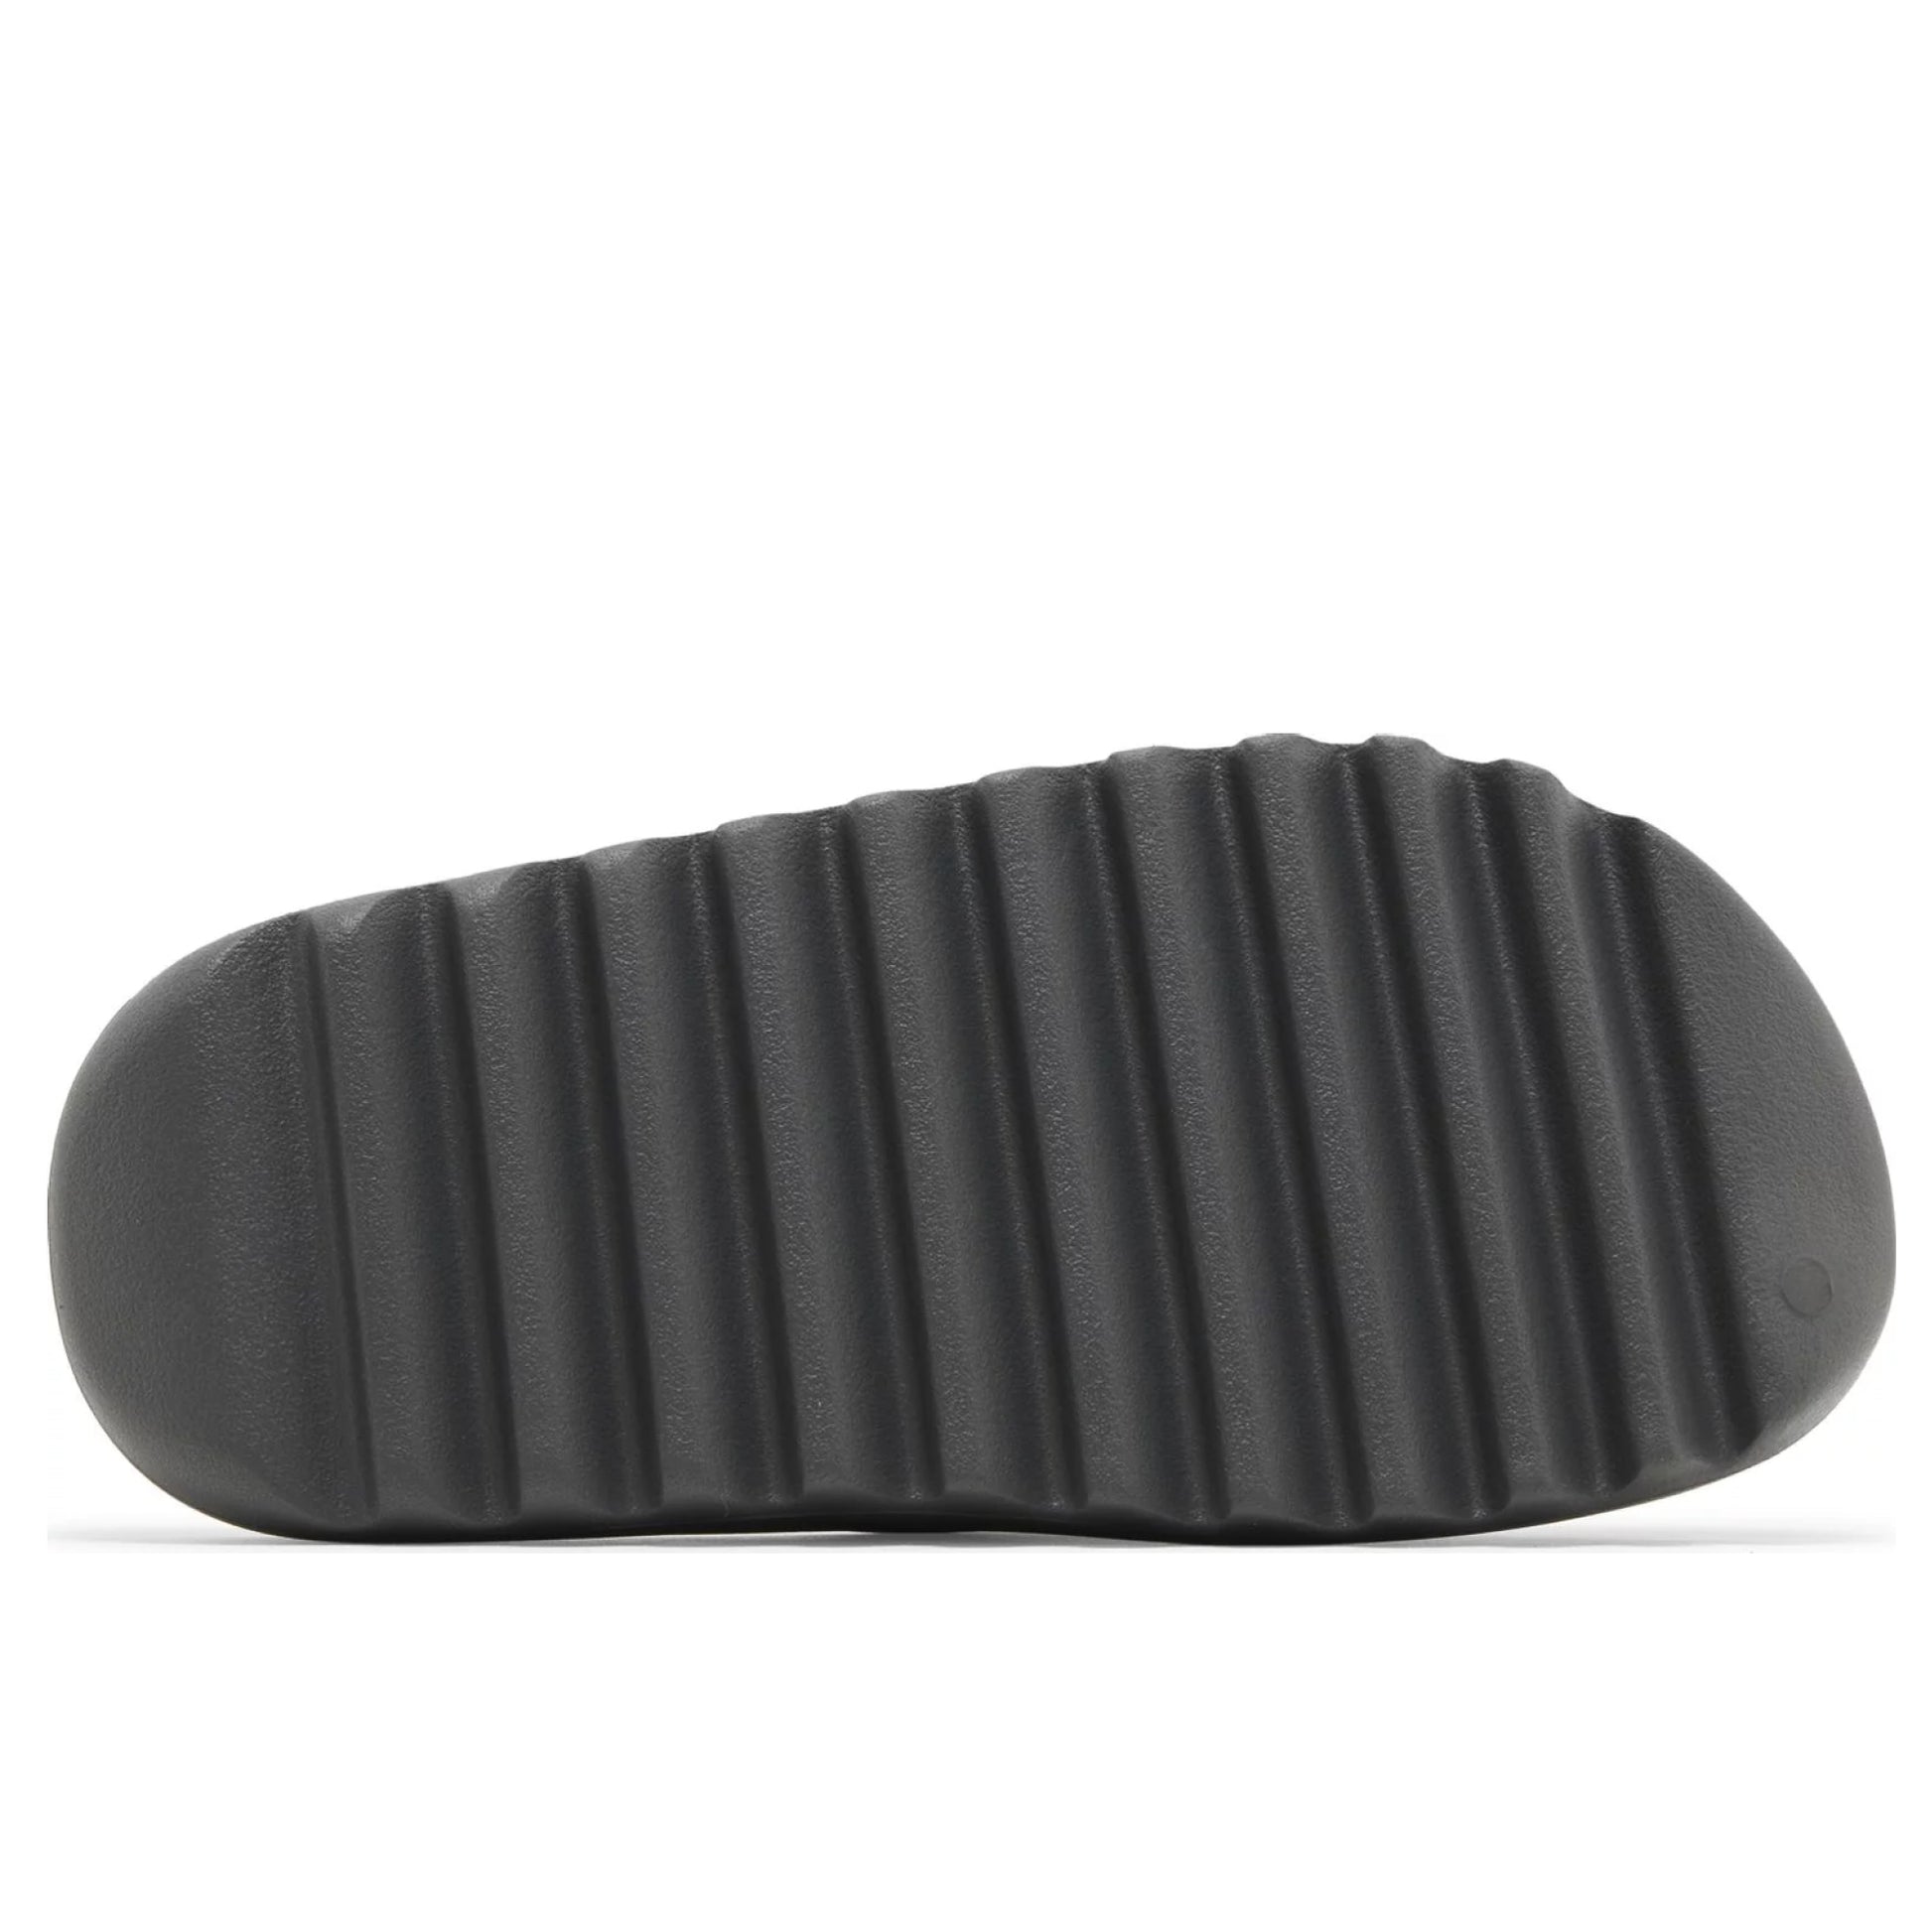 Adidas Yeezy Slide Granite Yeezy